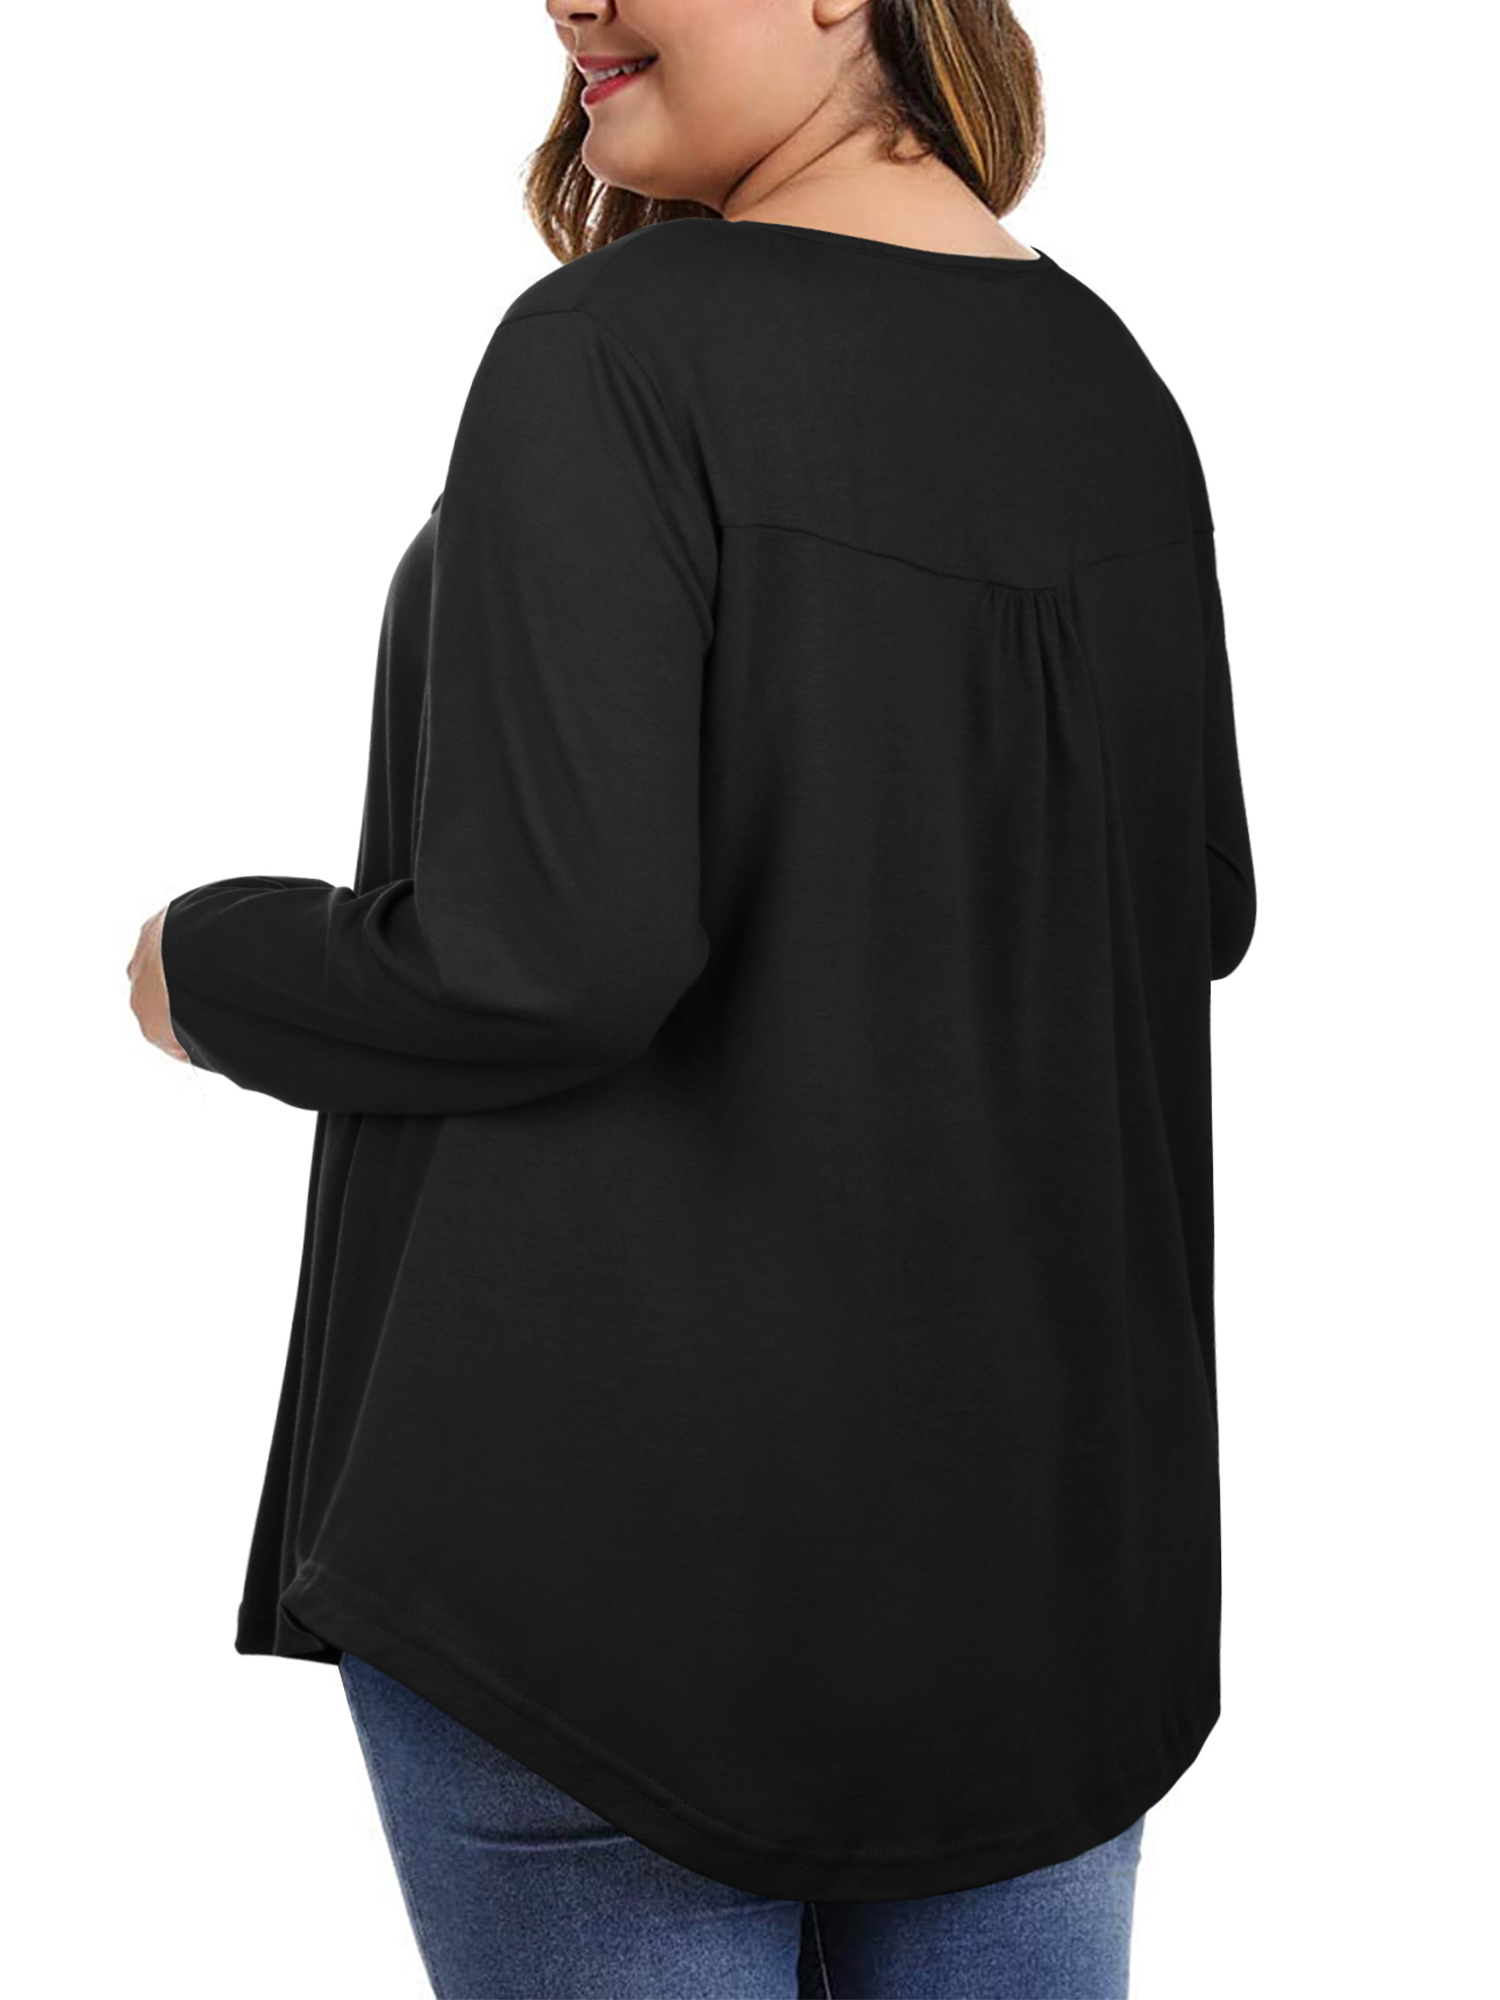 BELAROI Womens Plus Size Tunic Tops for Leggings Fall Casual Long Sleeve  T-Shirt Swing Loose Fit Blouse Shirts